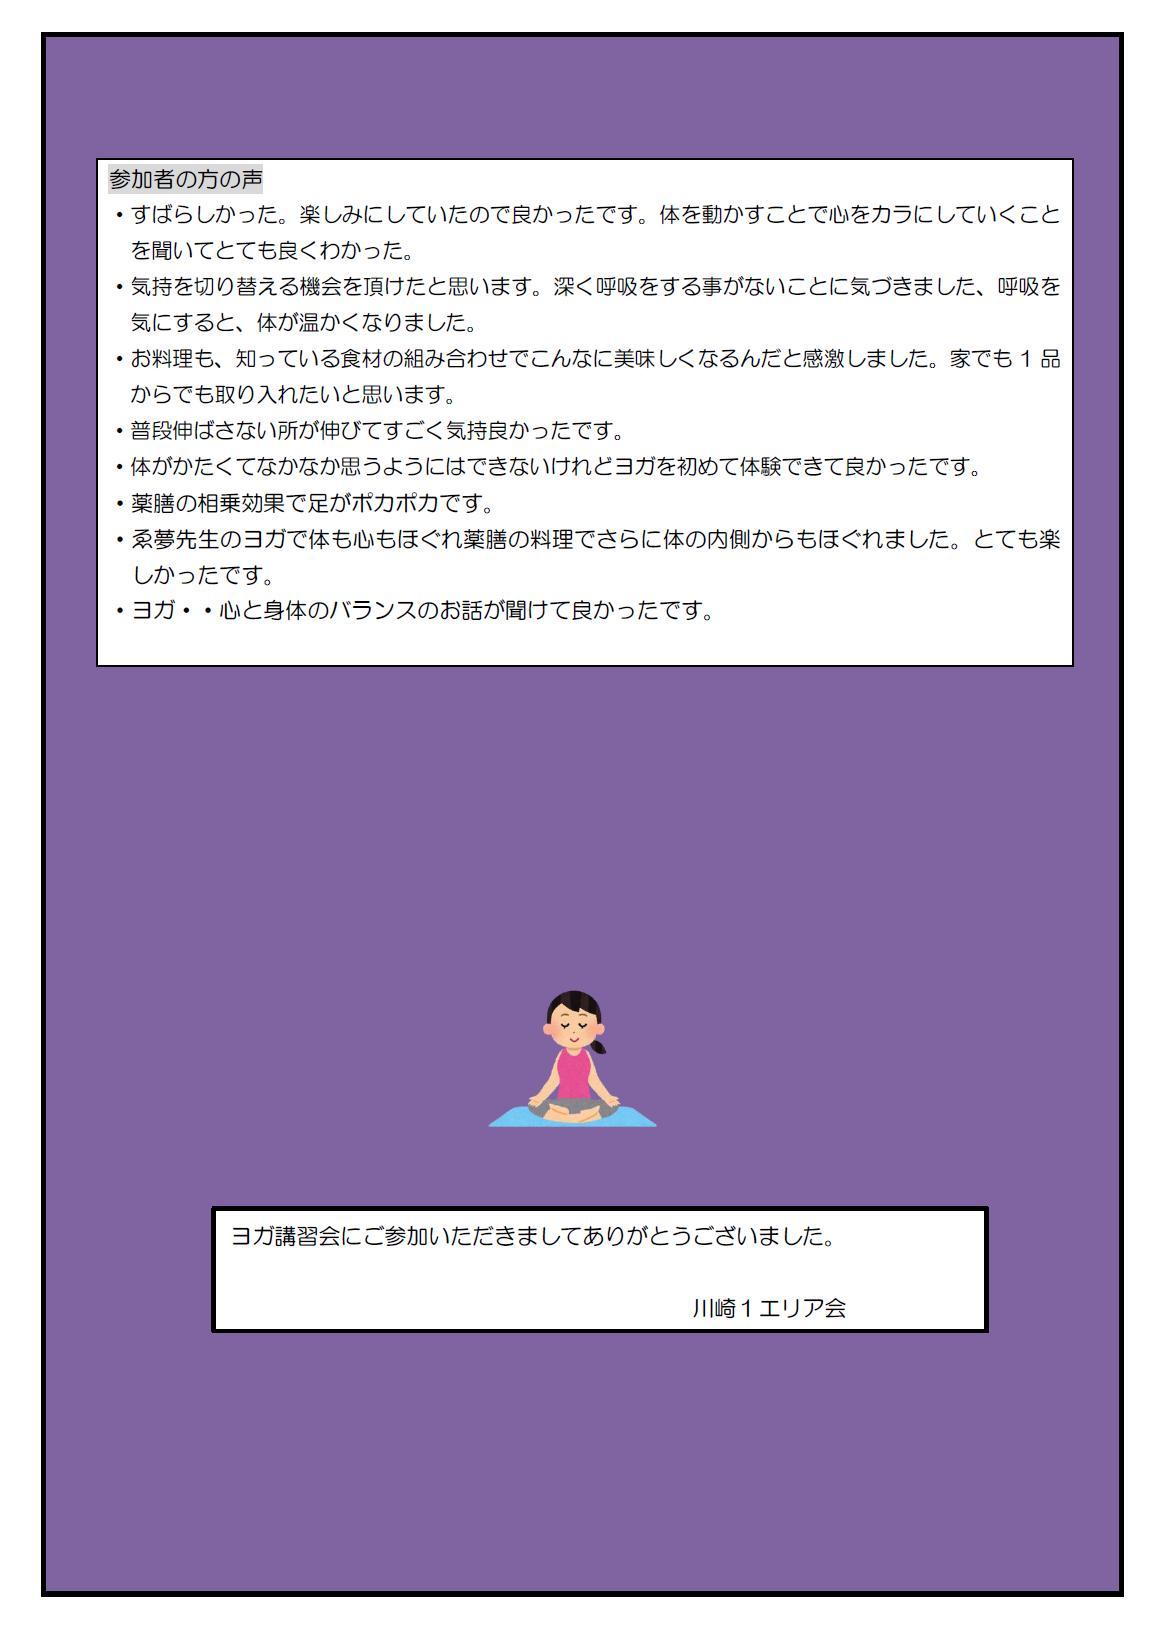 http://kanagawa.ucoop.or.jp/hiroba/areanews/files/2.28%20kawasaki1-yoga2.jpg